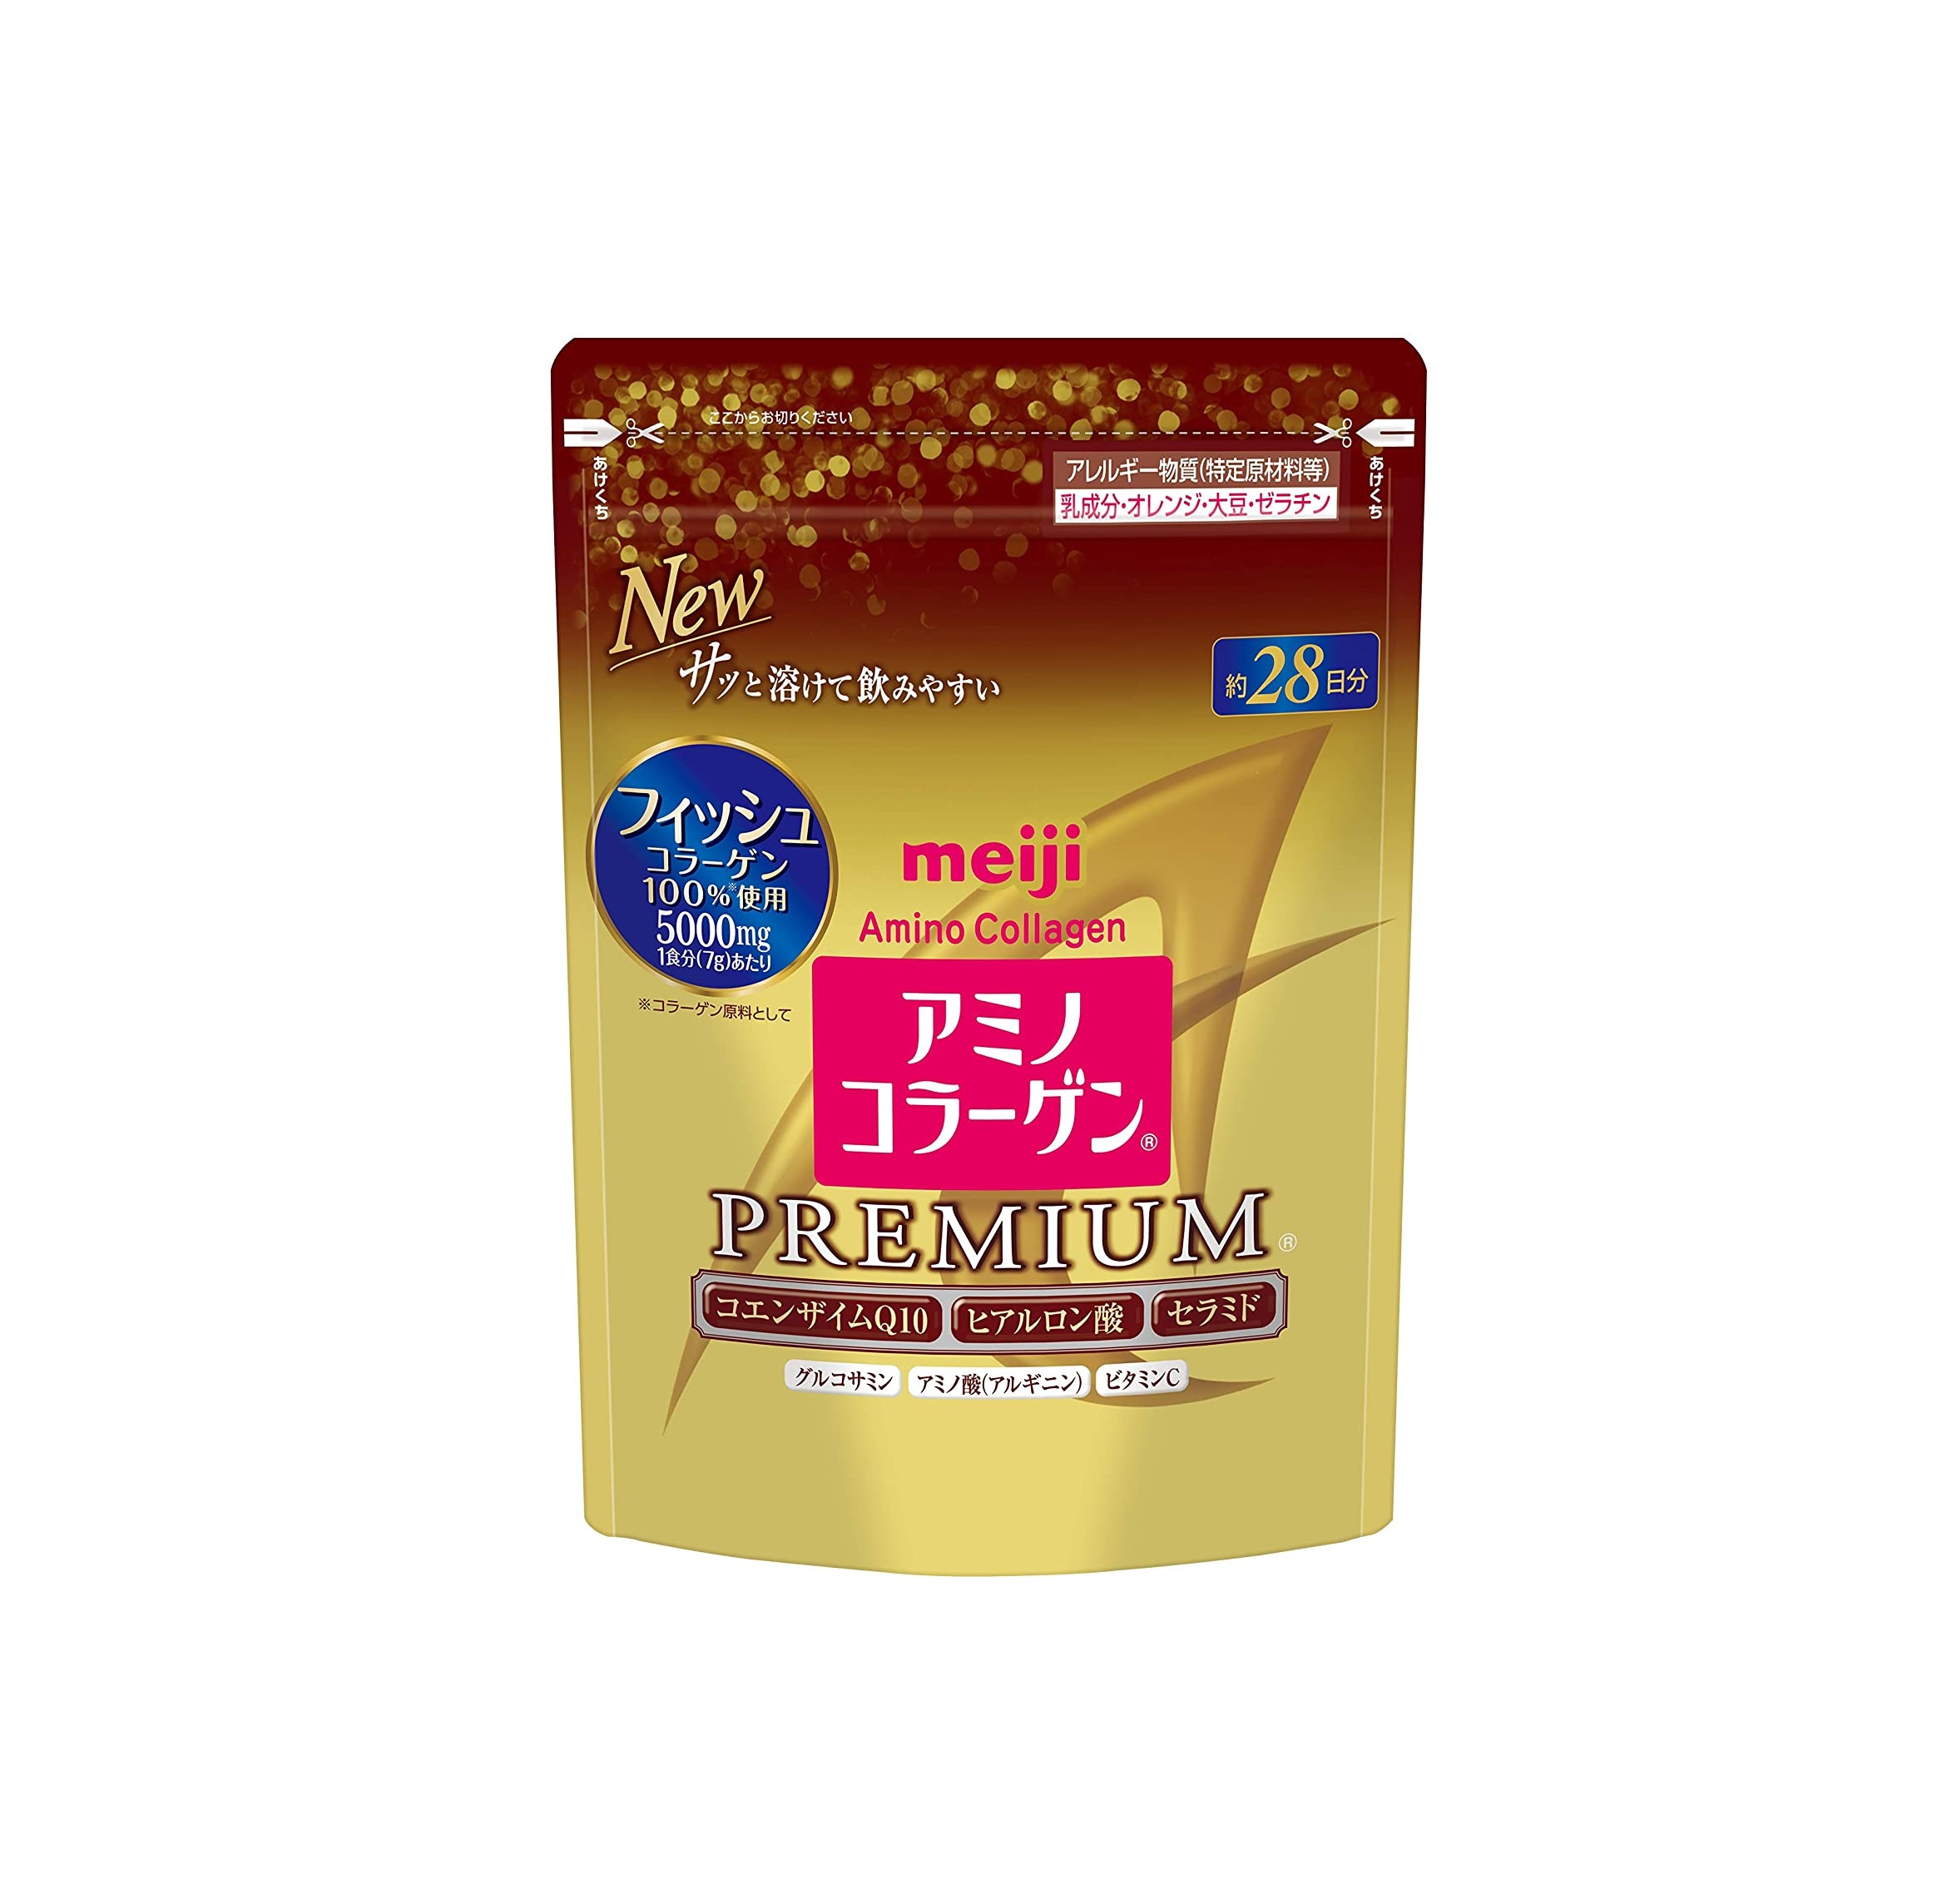 Meiji Amino Collagen Premium Rich — премиум коллаген (на 28 дней) — 